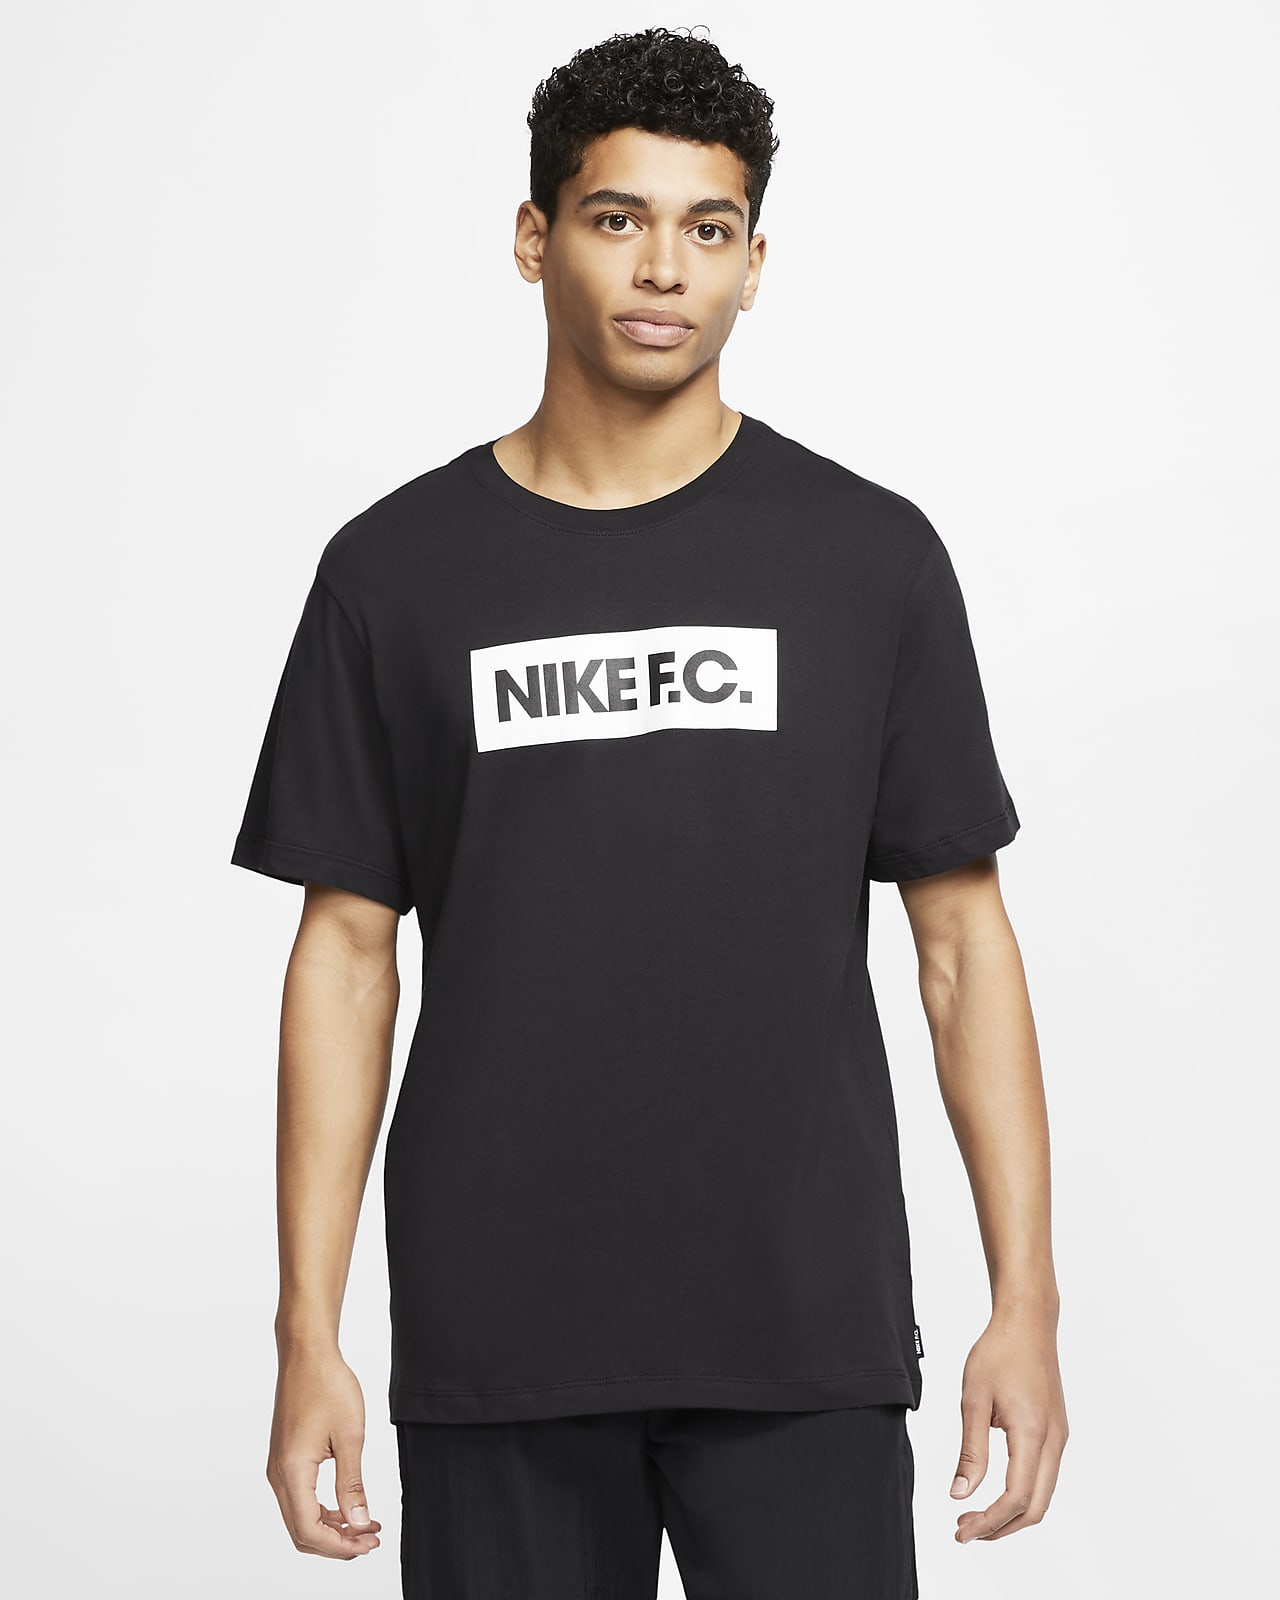 rol Klacht Krachtcel Nike F.C. SE11 Men's Football T-Shirt. Nike NL